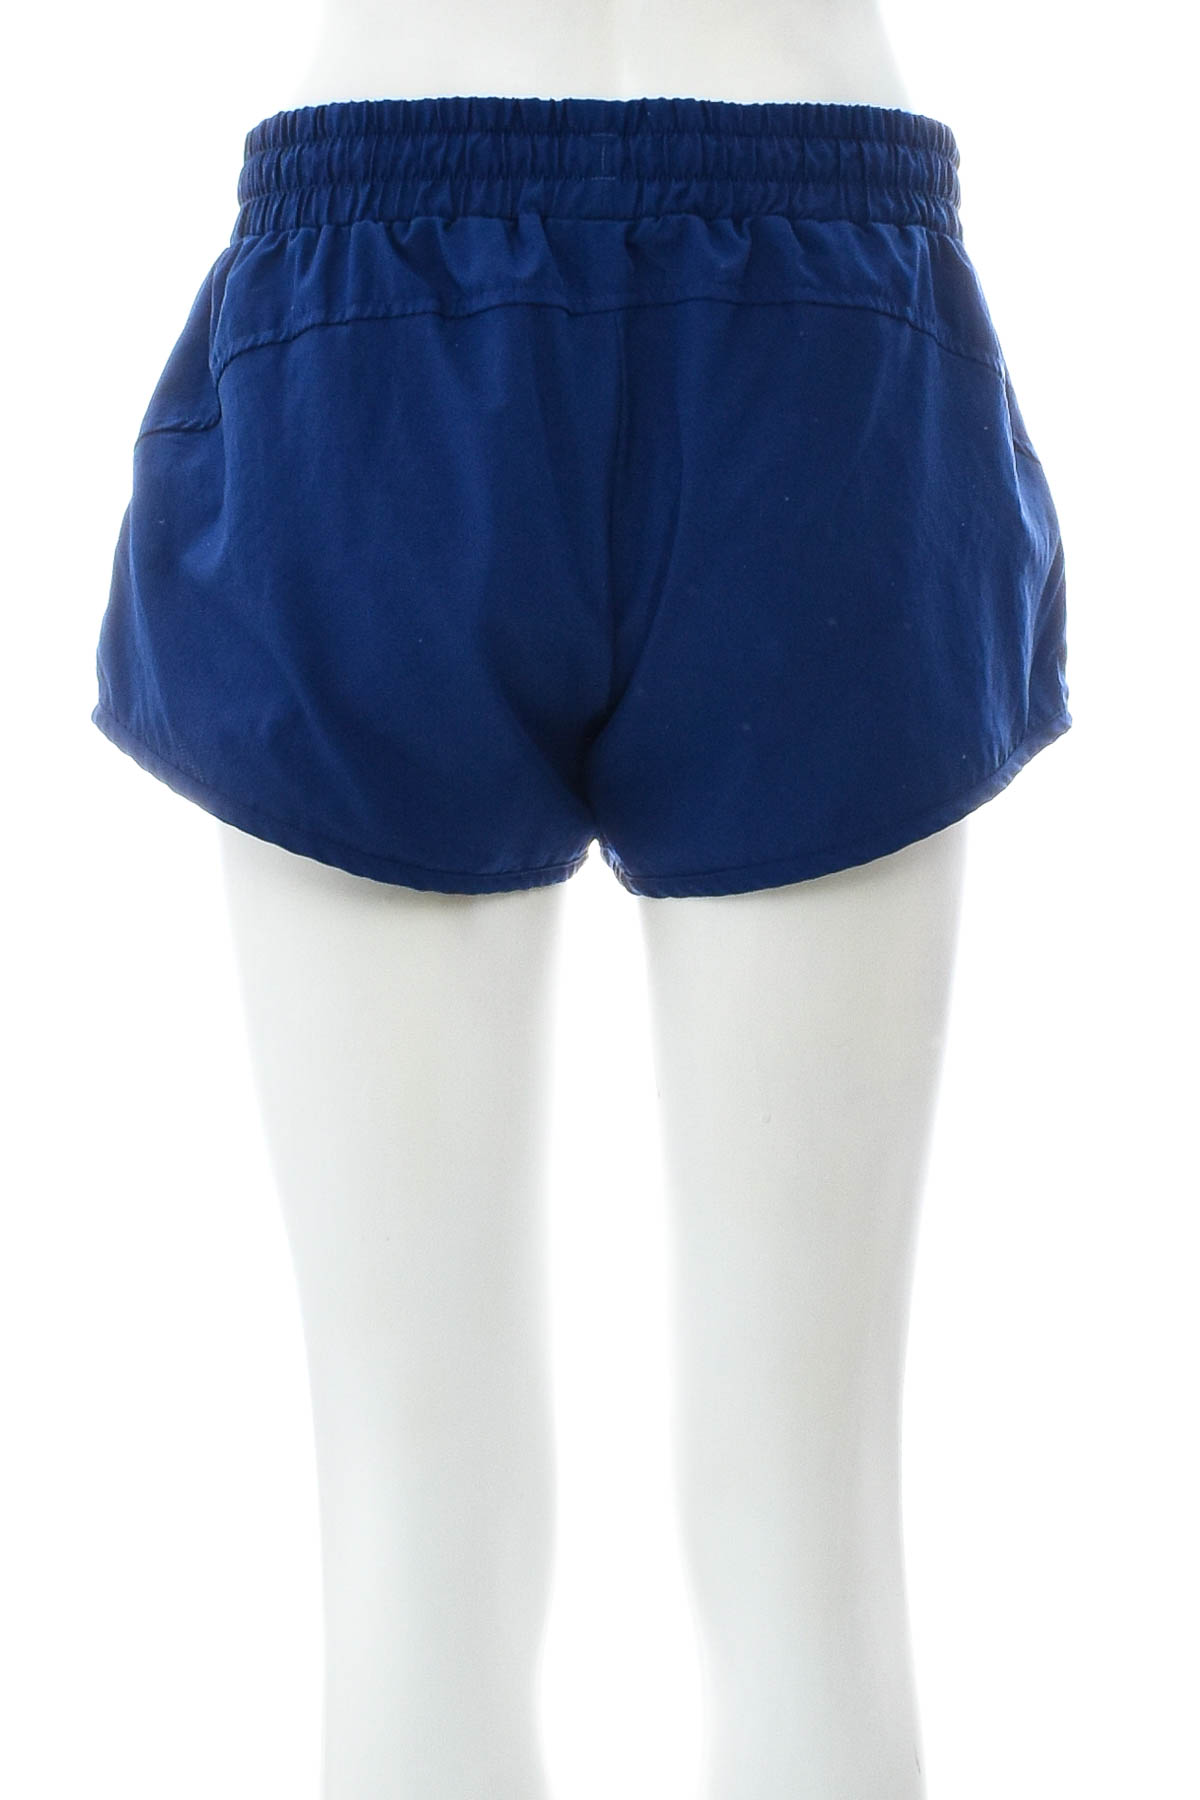 Women's shorts - PUMA - 1